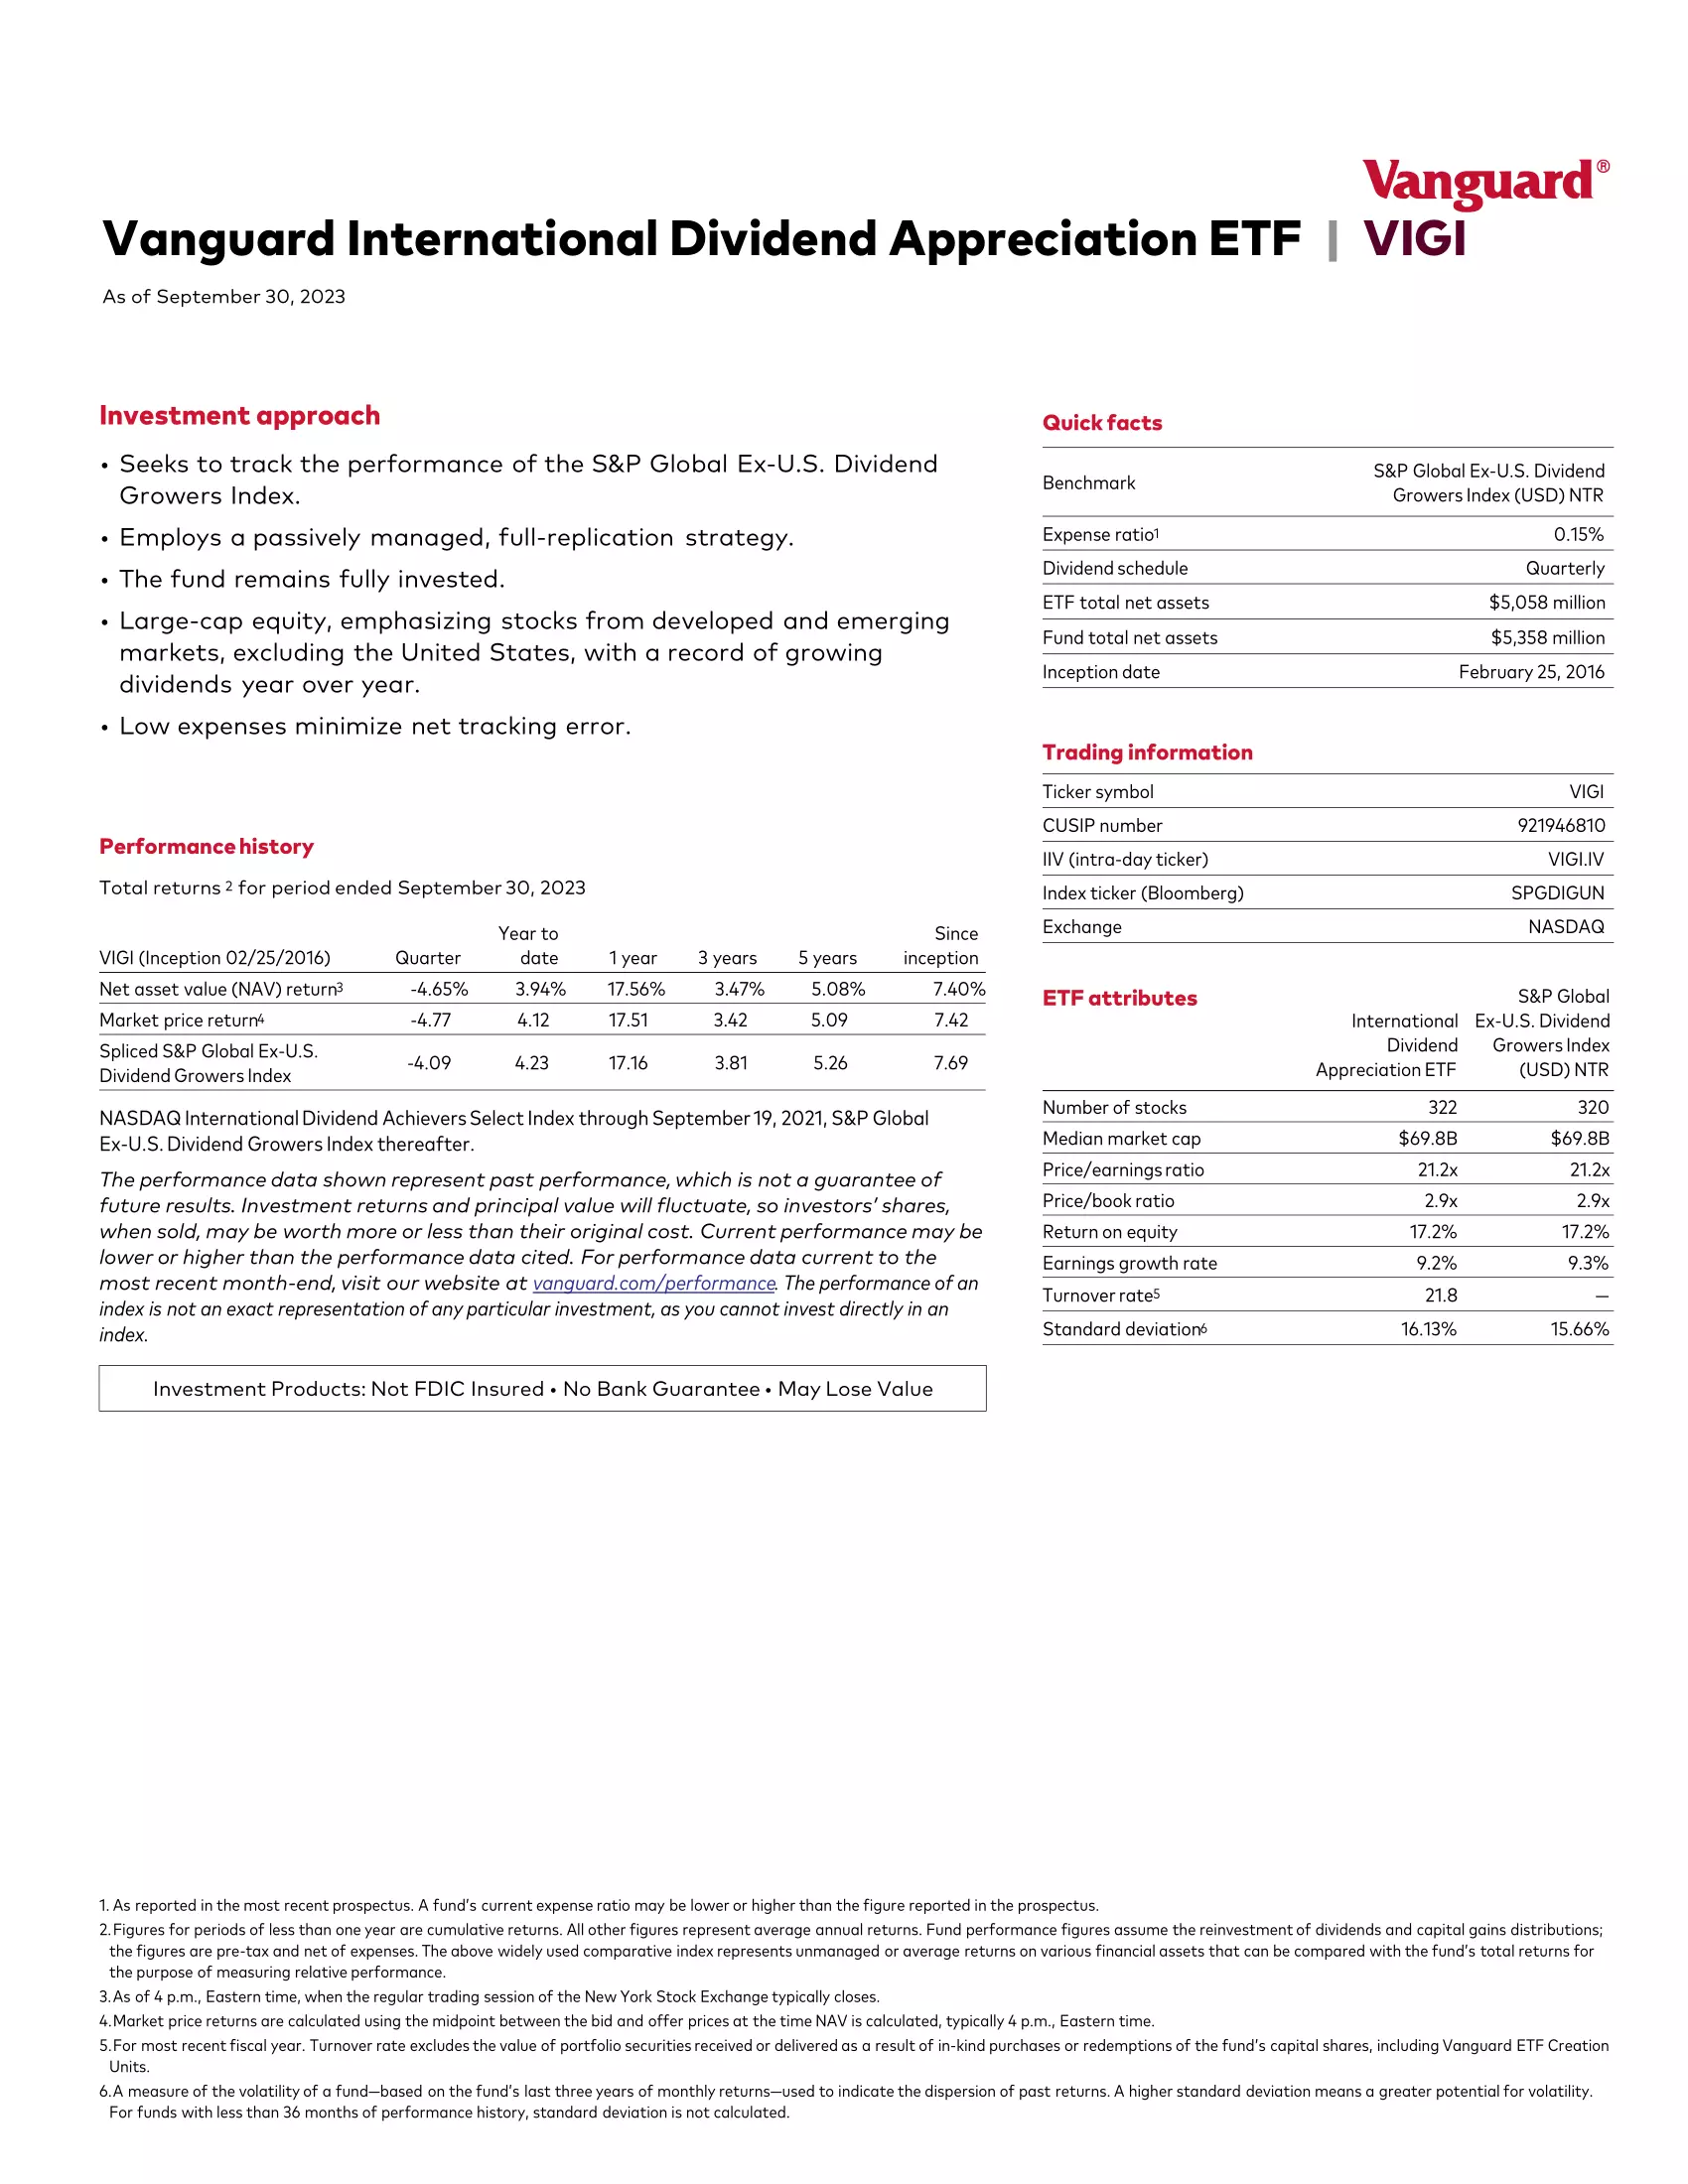 VIGI: Vanguard International Dividend Appreciation Index Fund